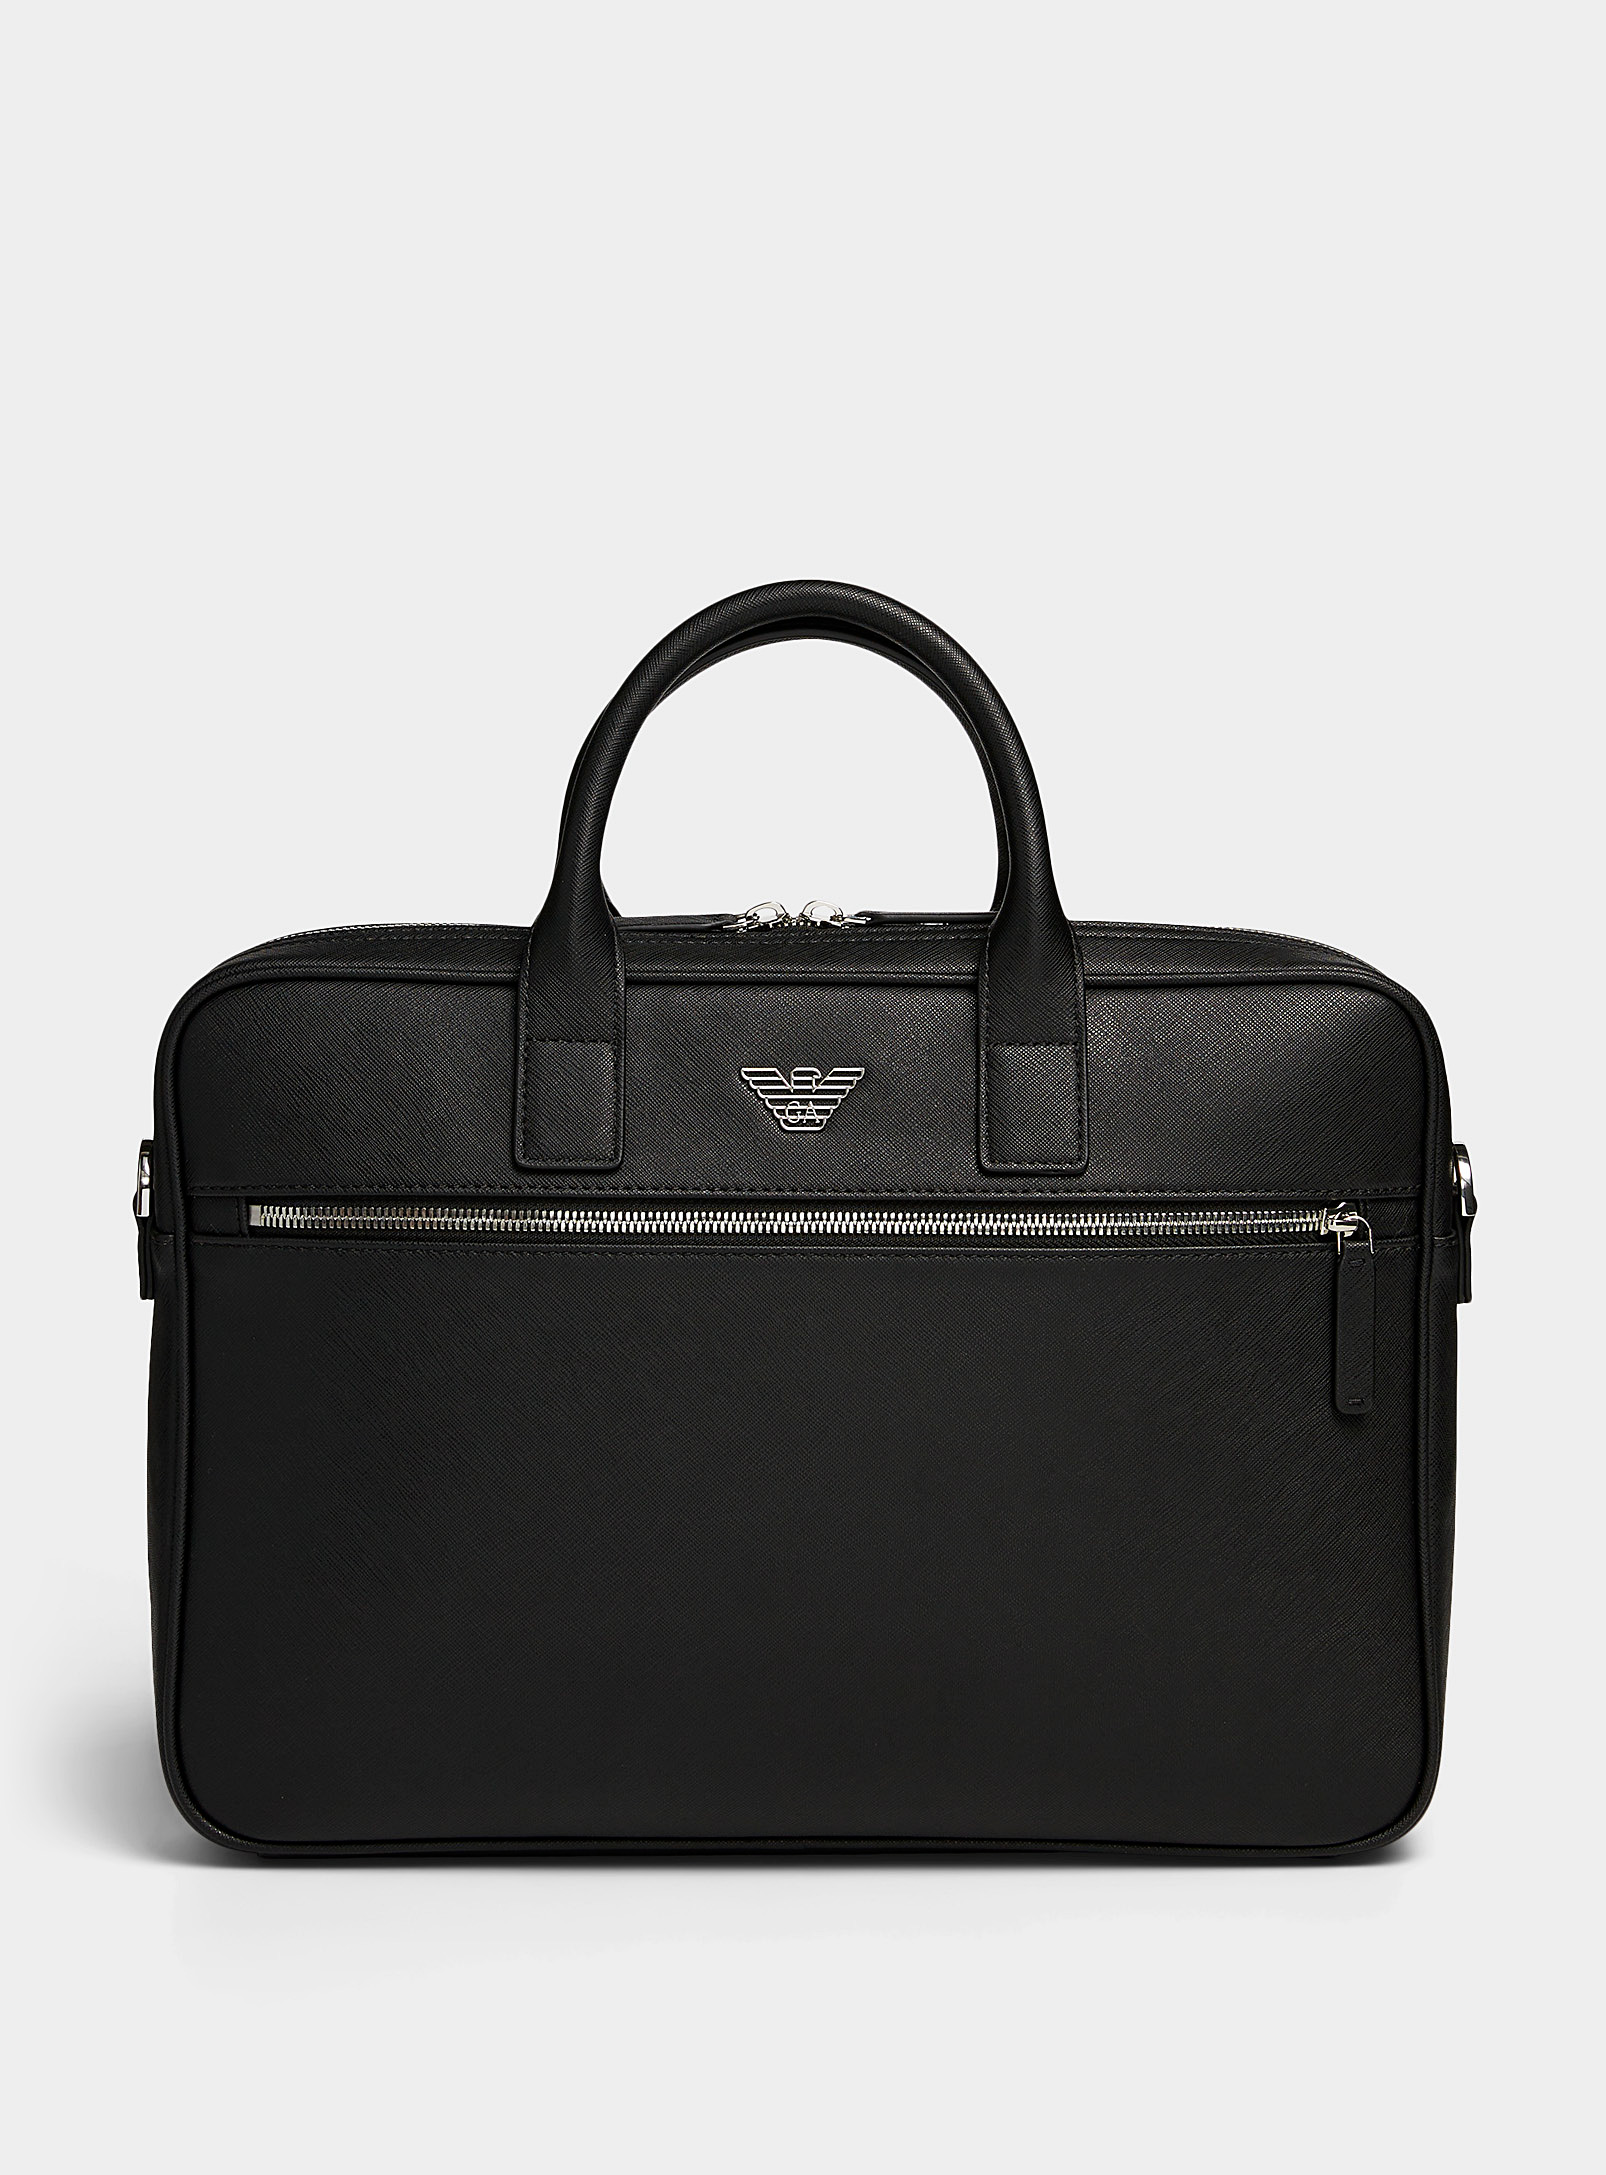 Emporio Armani - Men's Regenerated leather briefcase